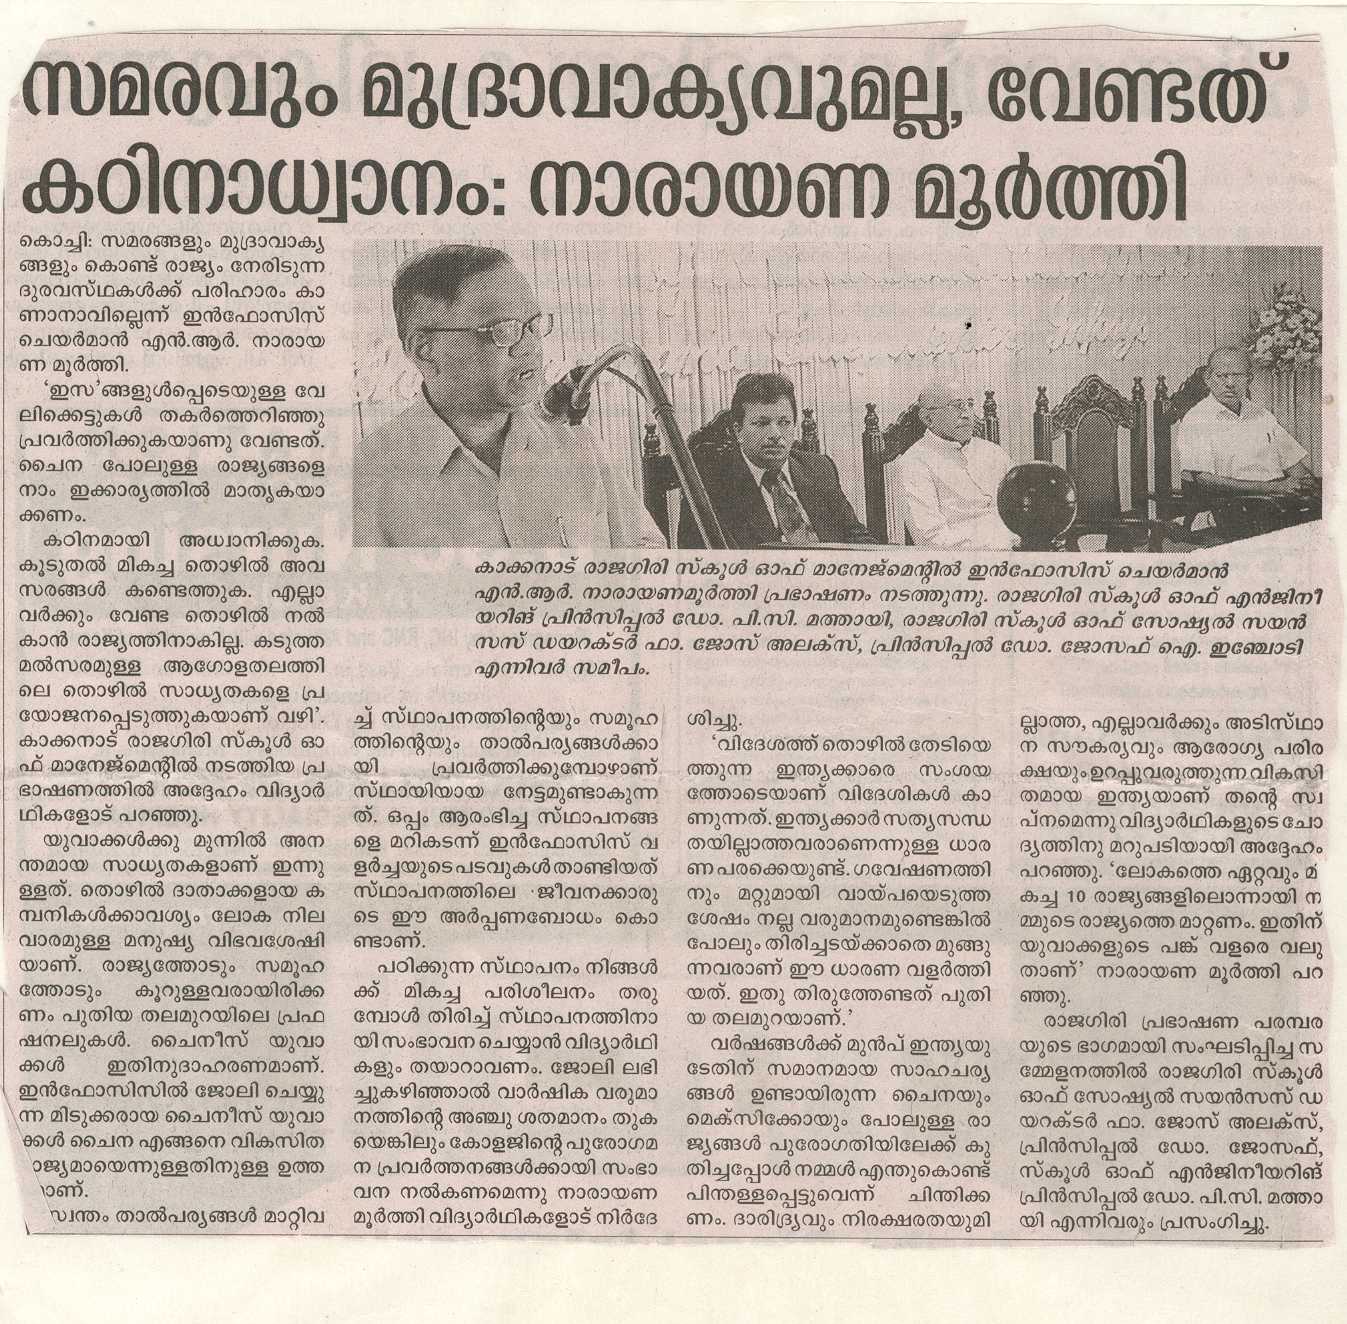 Infosys Chairman Narayanamoorthy's visit